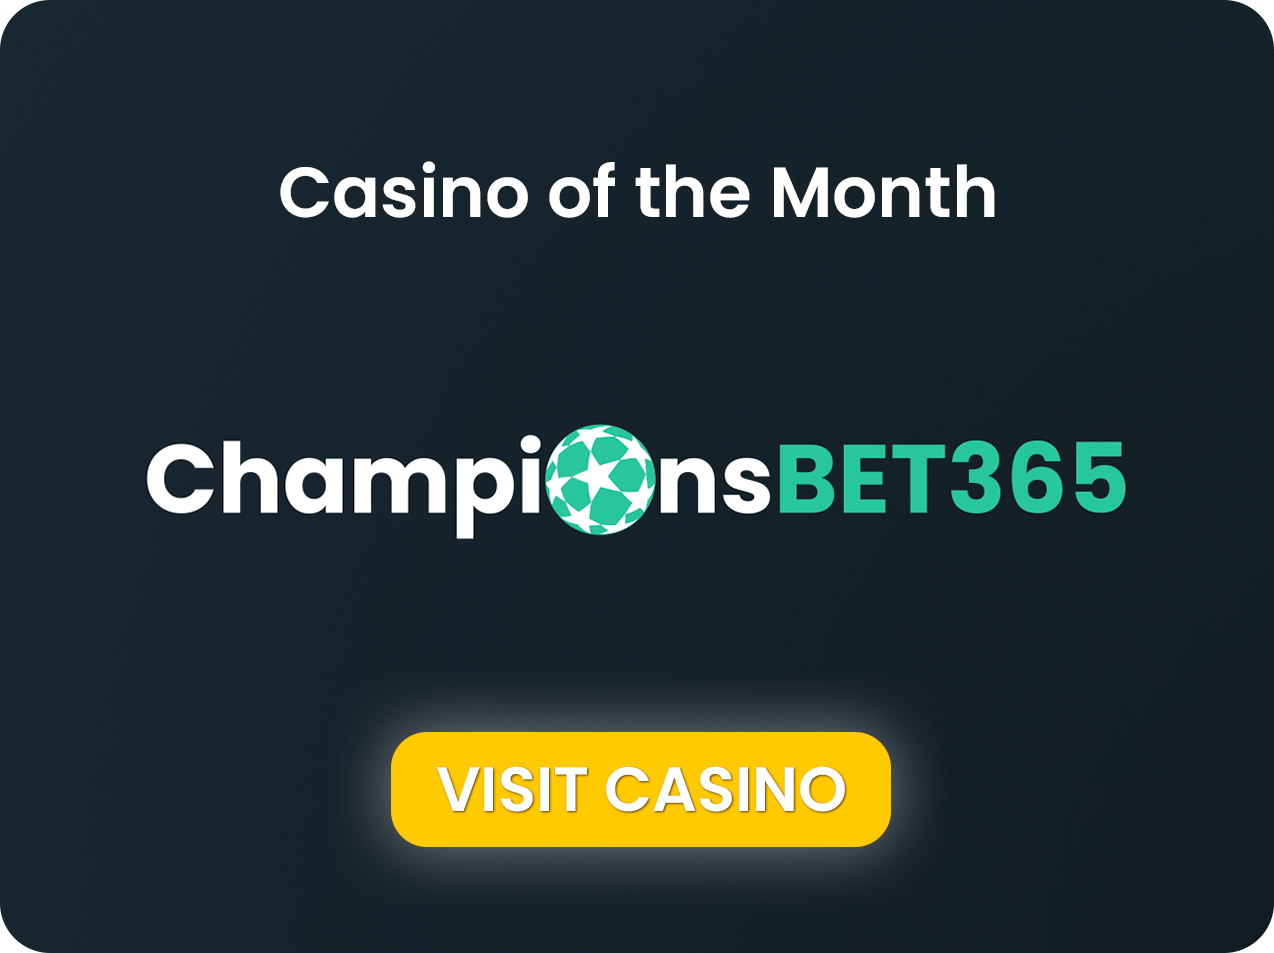 Championsbet365 Casino du mois